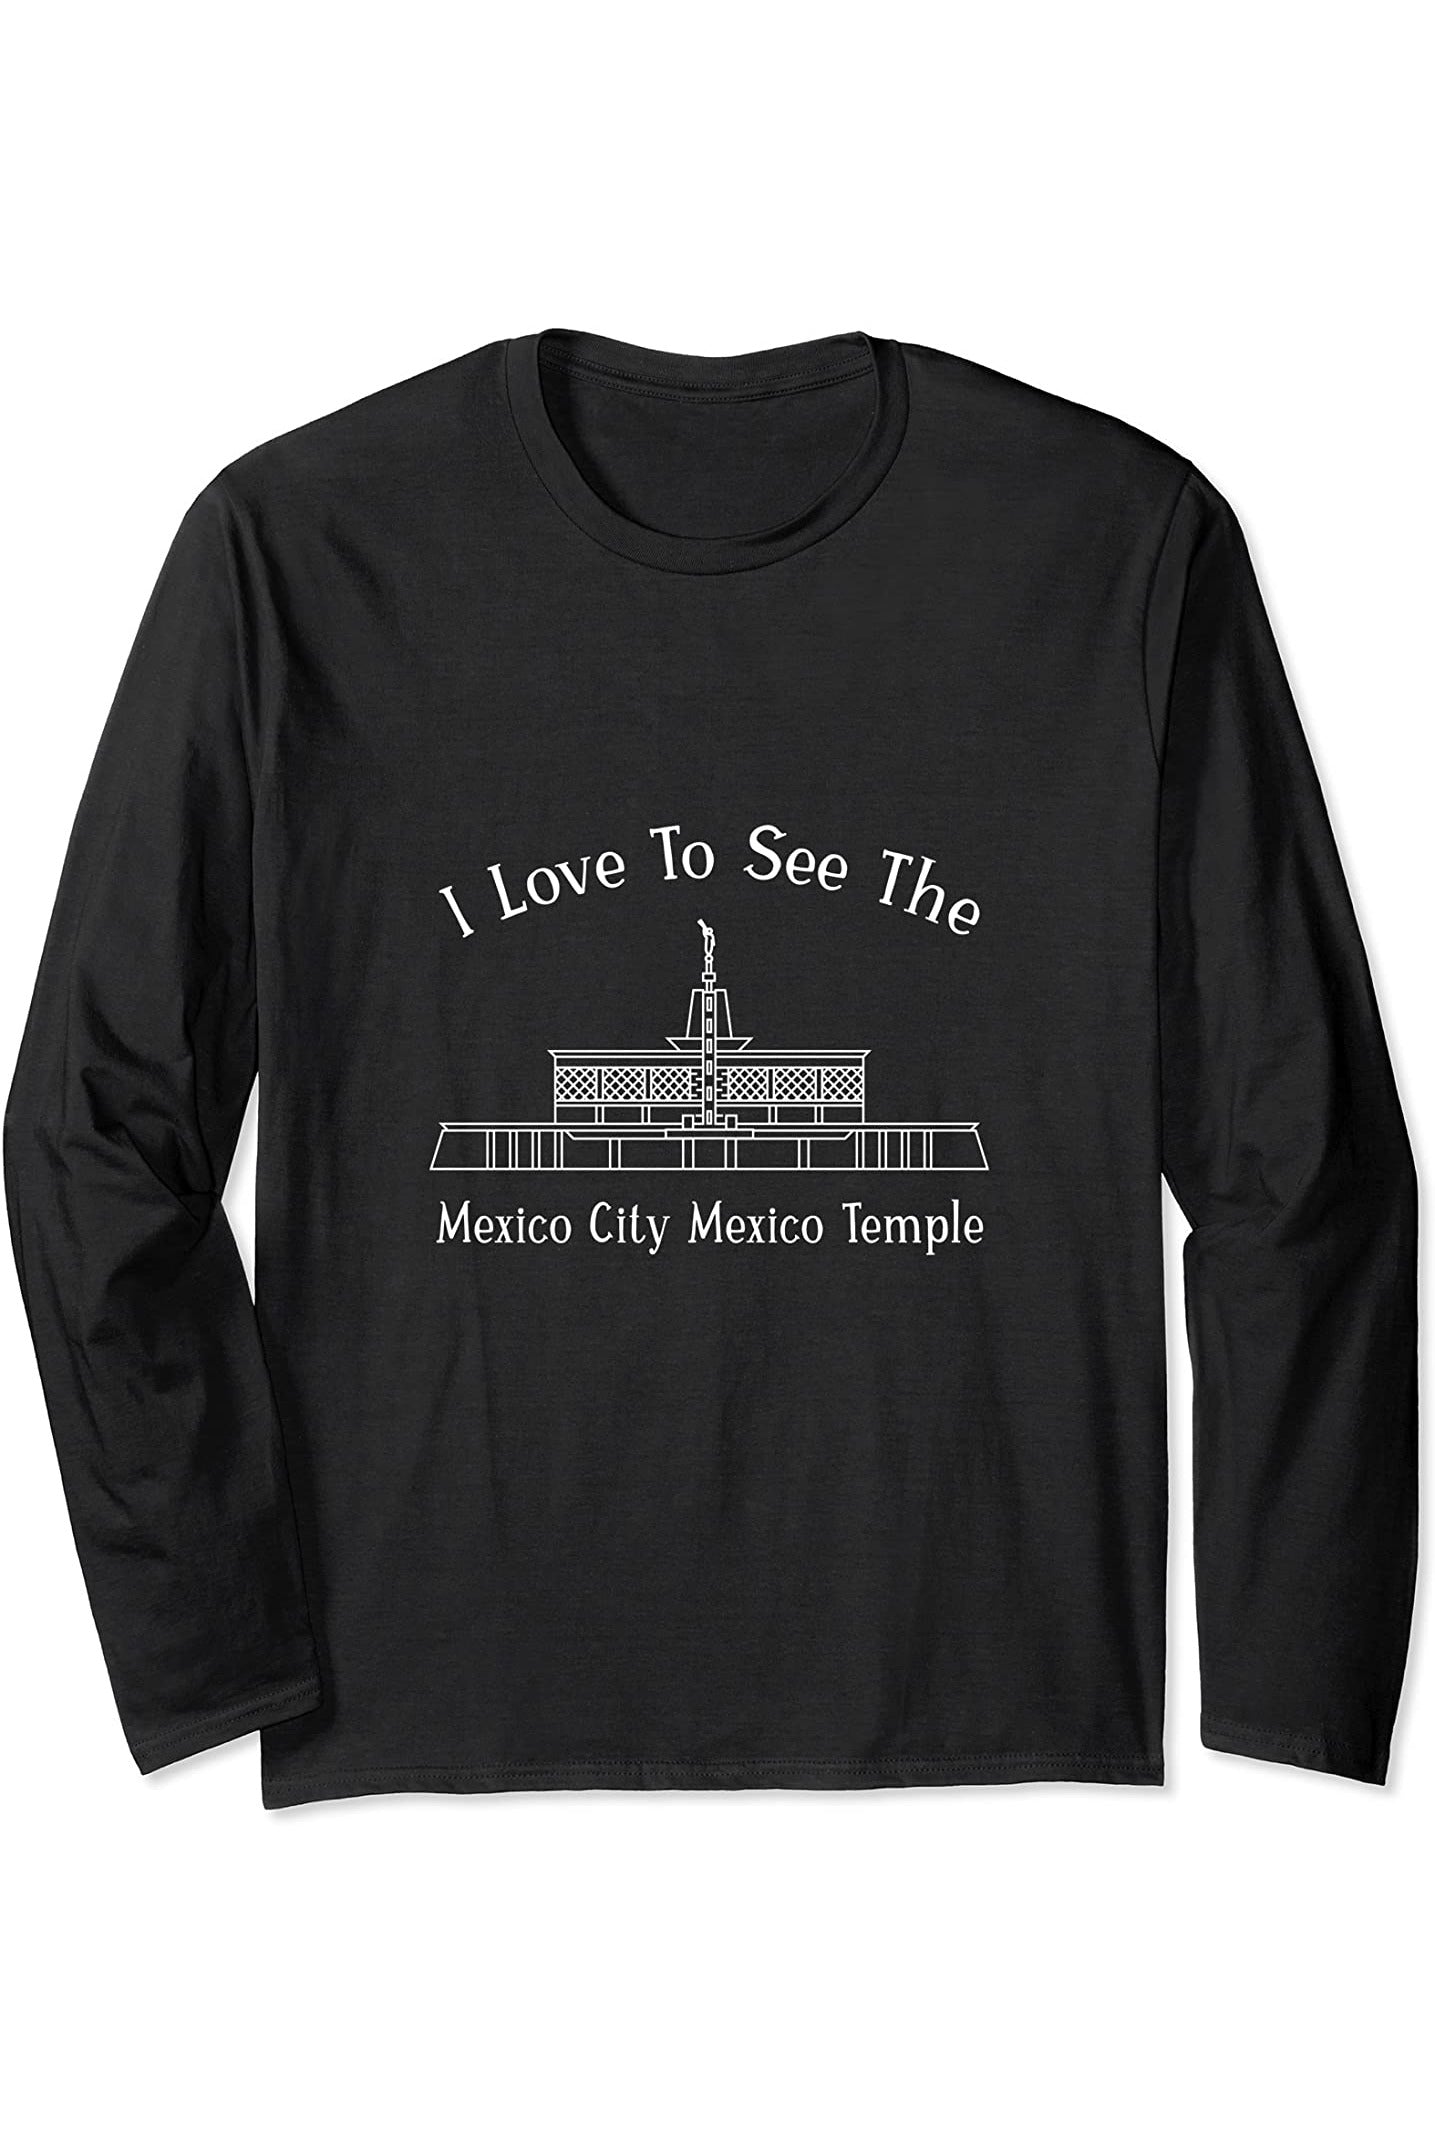 Mexico City Mexico Temple Long Sleeve T-Shirt - Happy Style (English) US